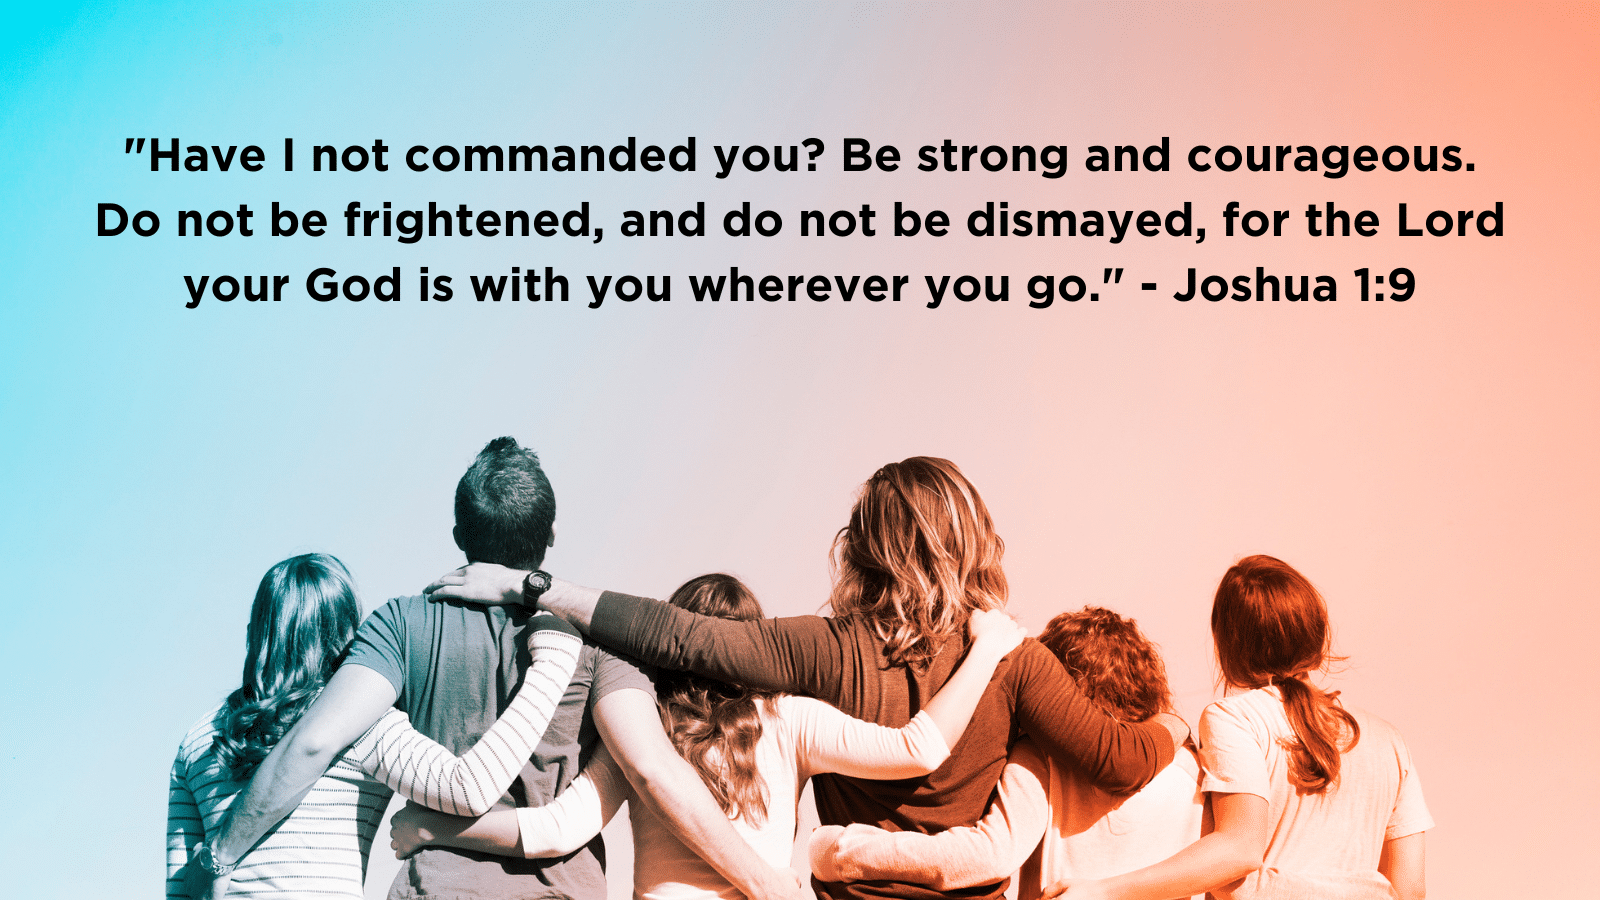 Joshua 1:9 Bible verse with family facing back